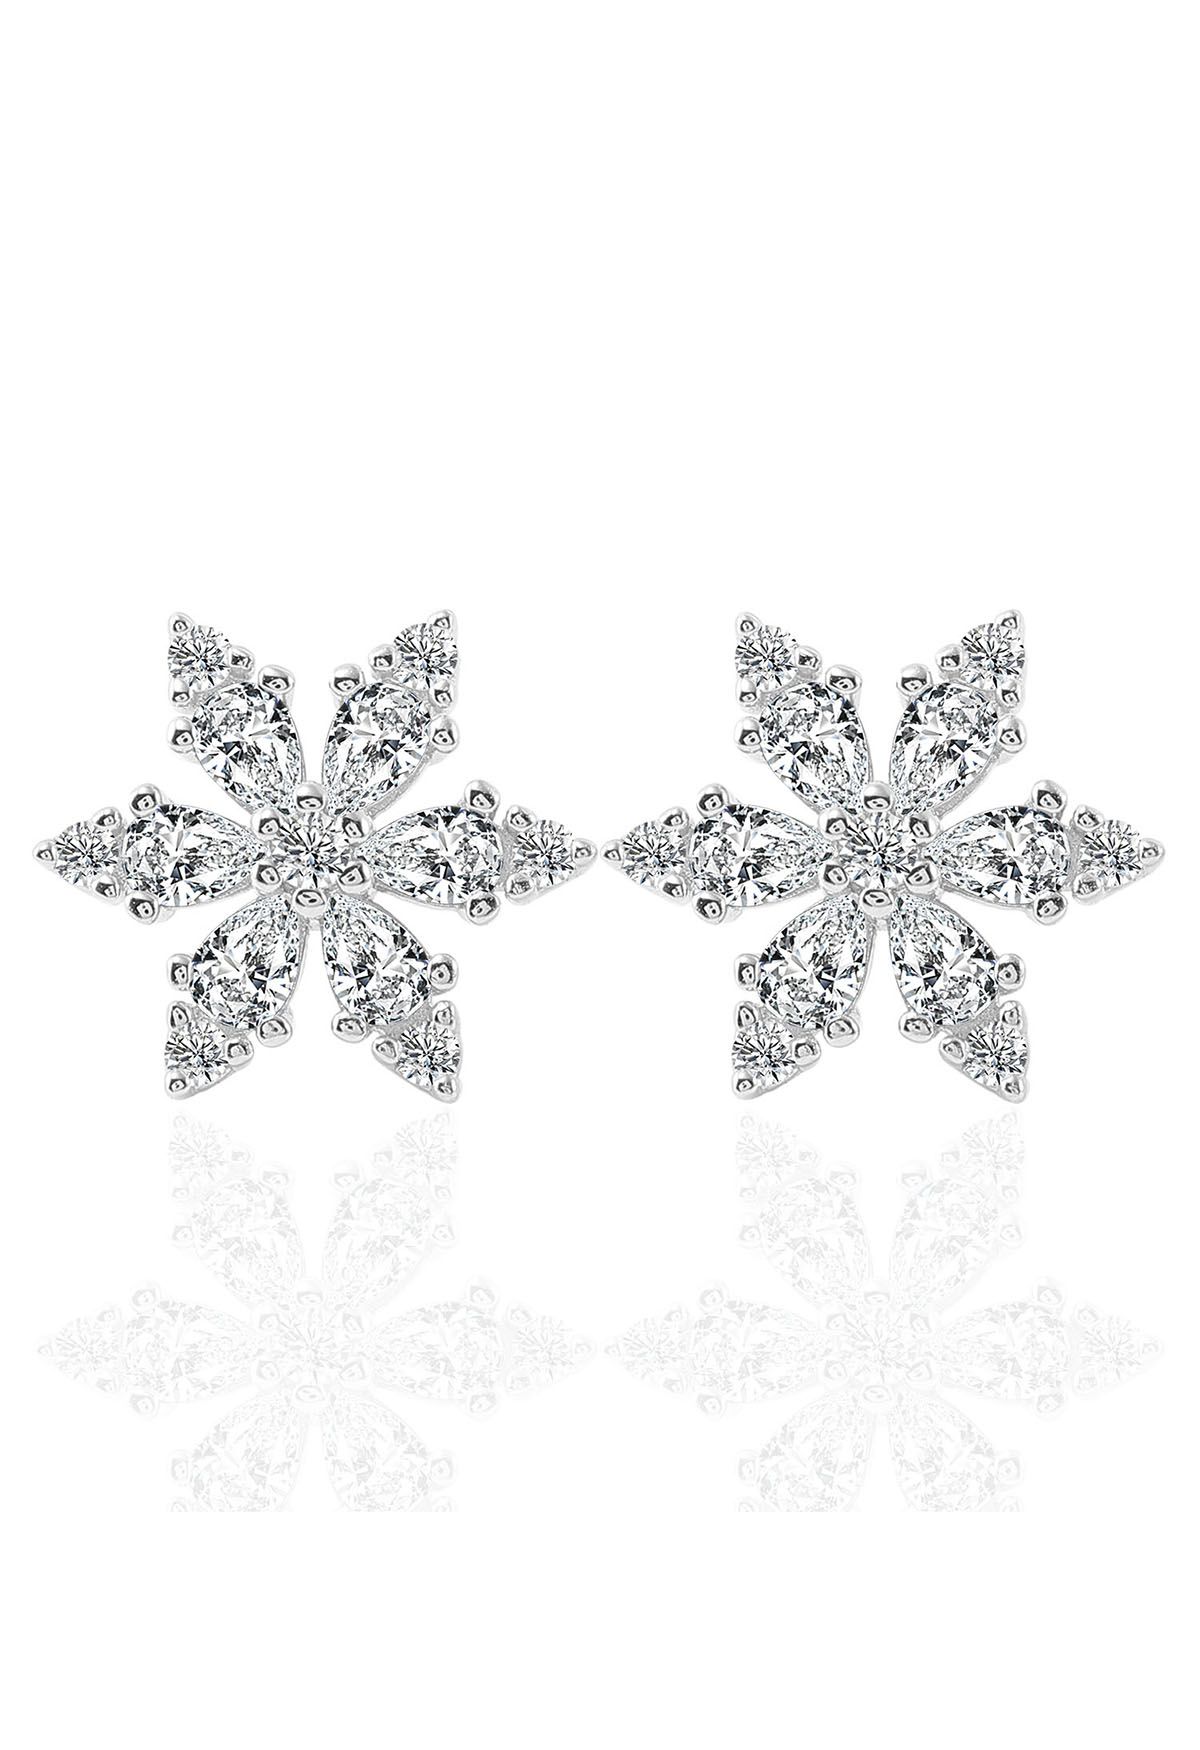 Aretes de diamantes Moissanite completos de copo de nieve